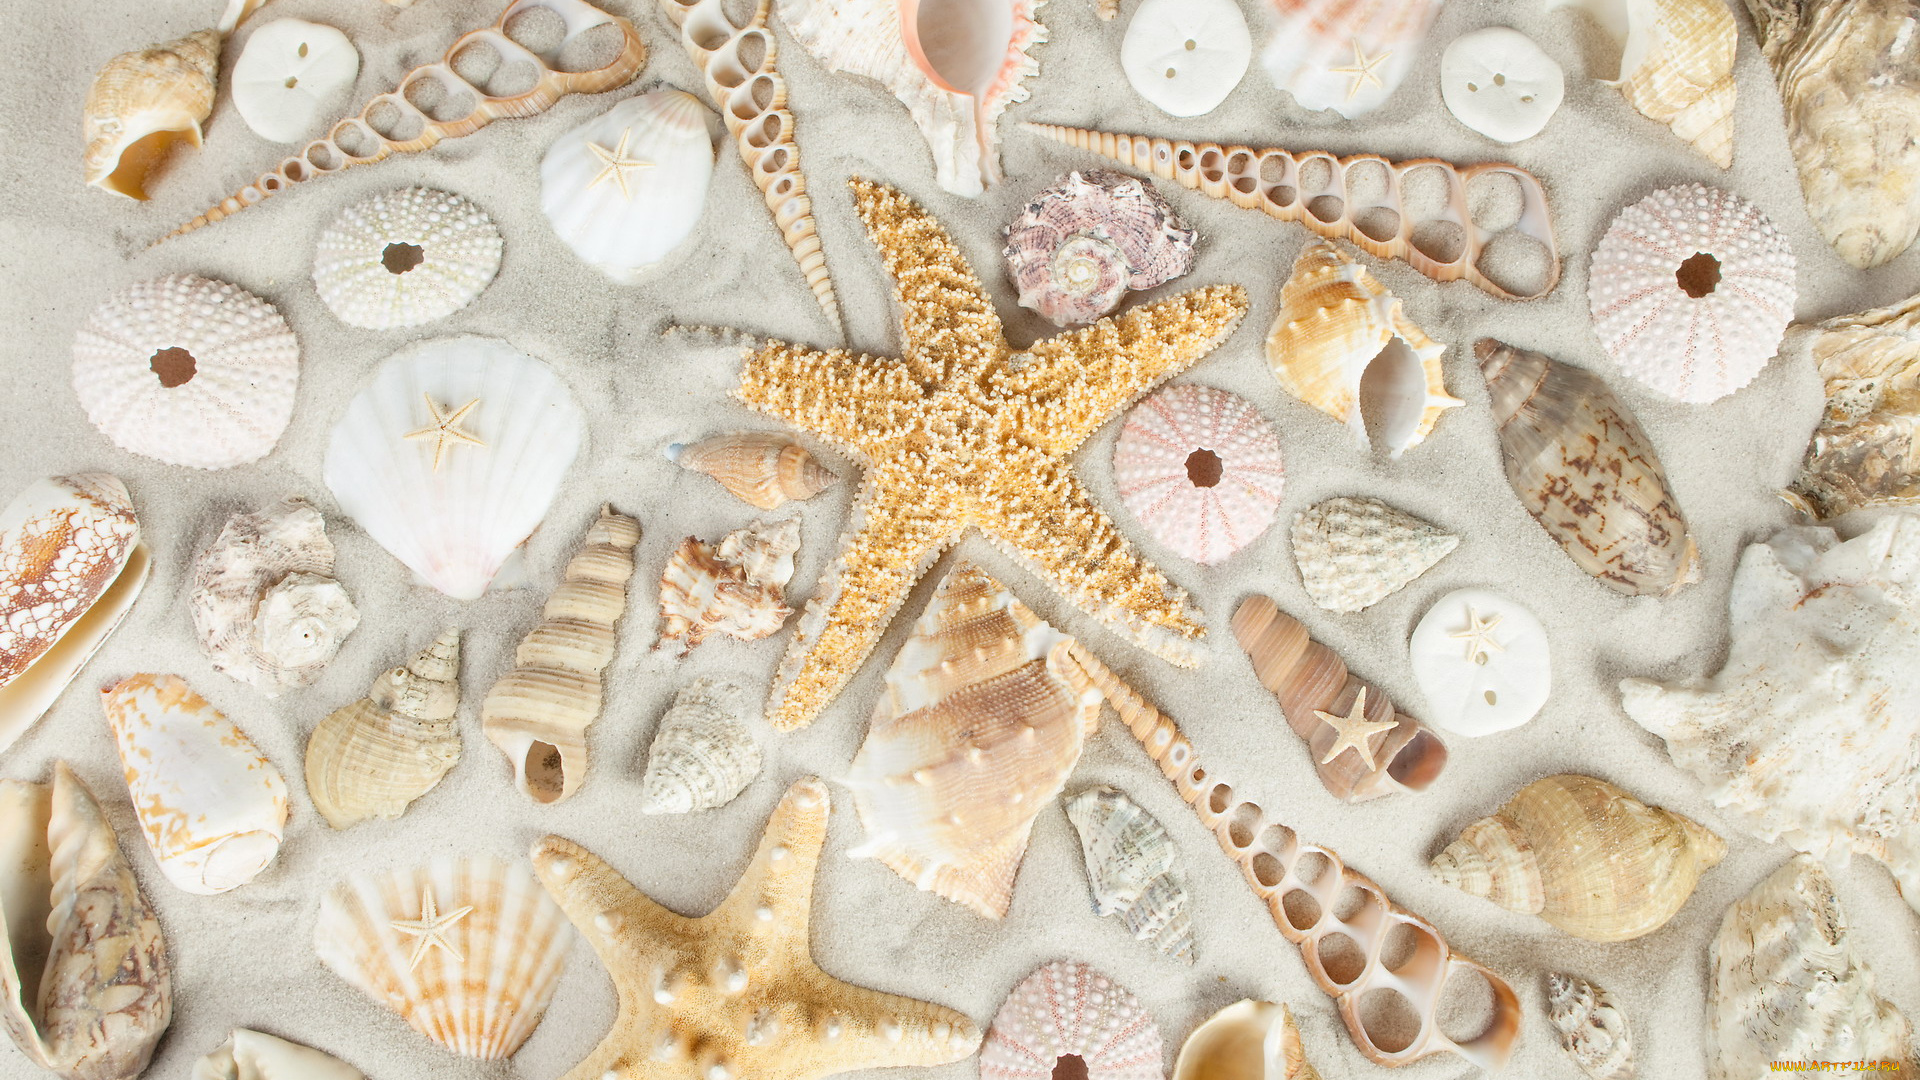 разное, ракушки, , кораллы, , декоративные, и, spa-камни, много, морская, звезда